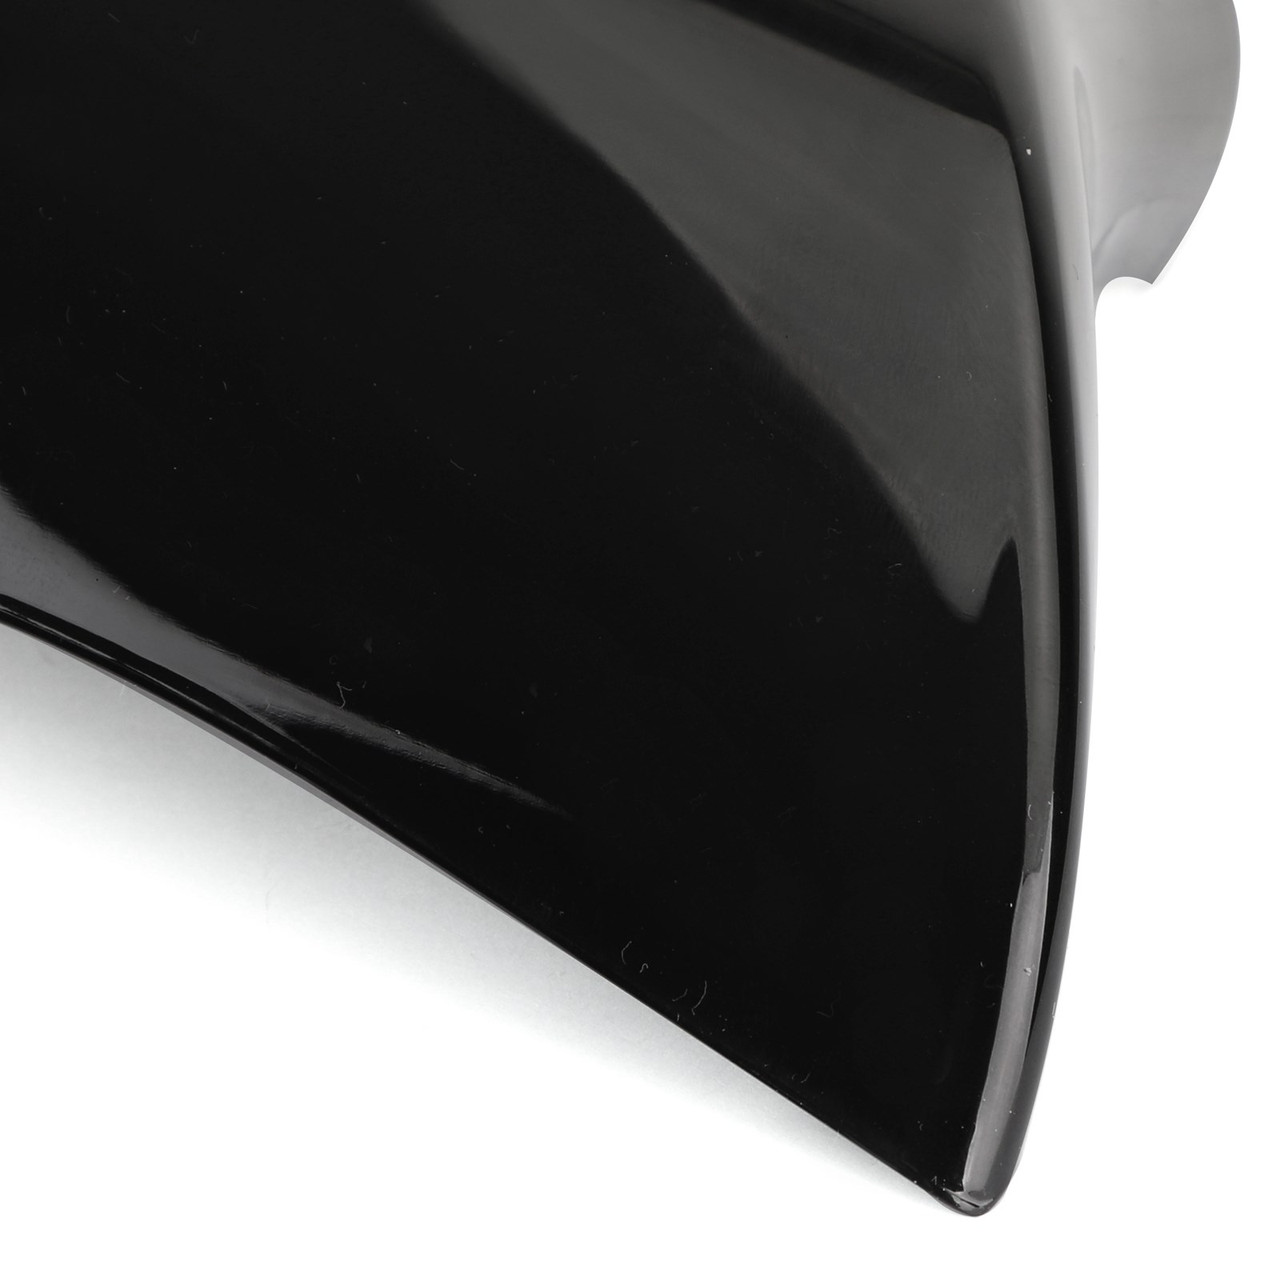 Rearview Mirror Cover Fits For BMW F15 X5 & F16 X6 14-18  BMW X4 F26 14-18  BMW X3 E83 14-18 Glosse Black